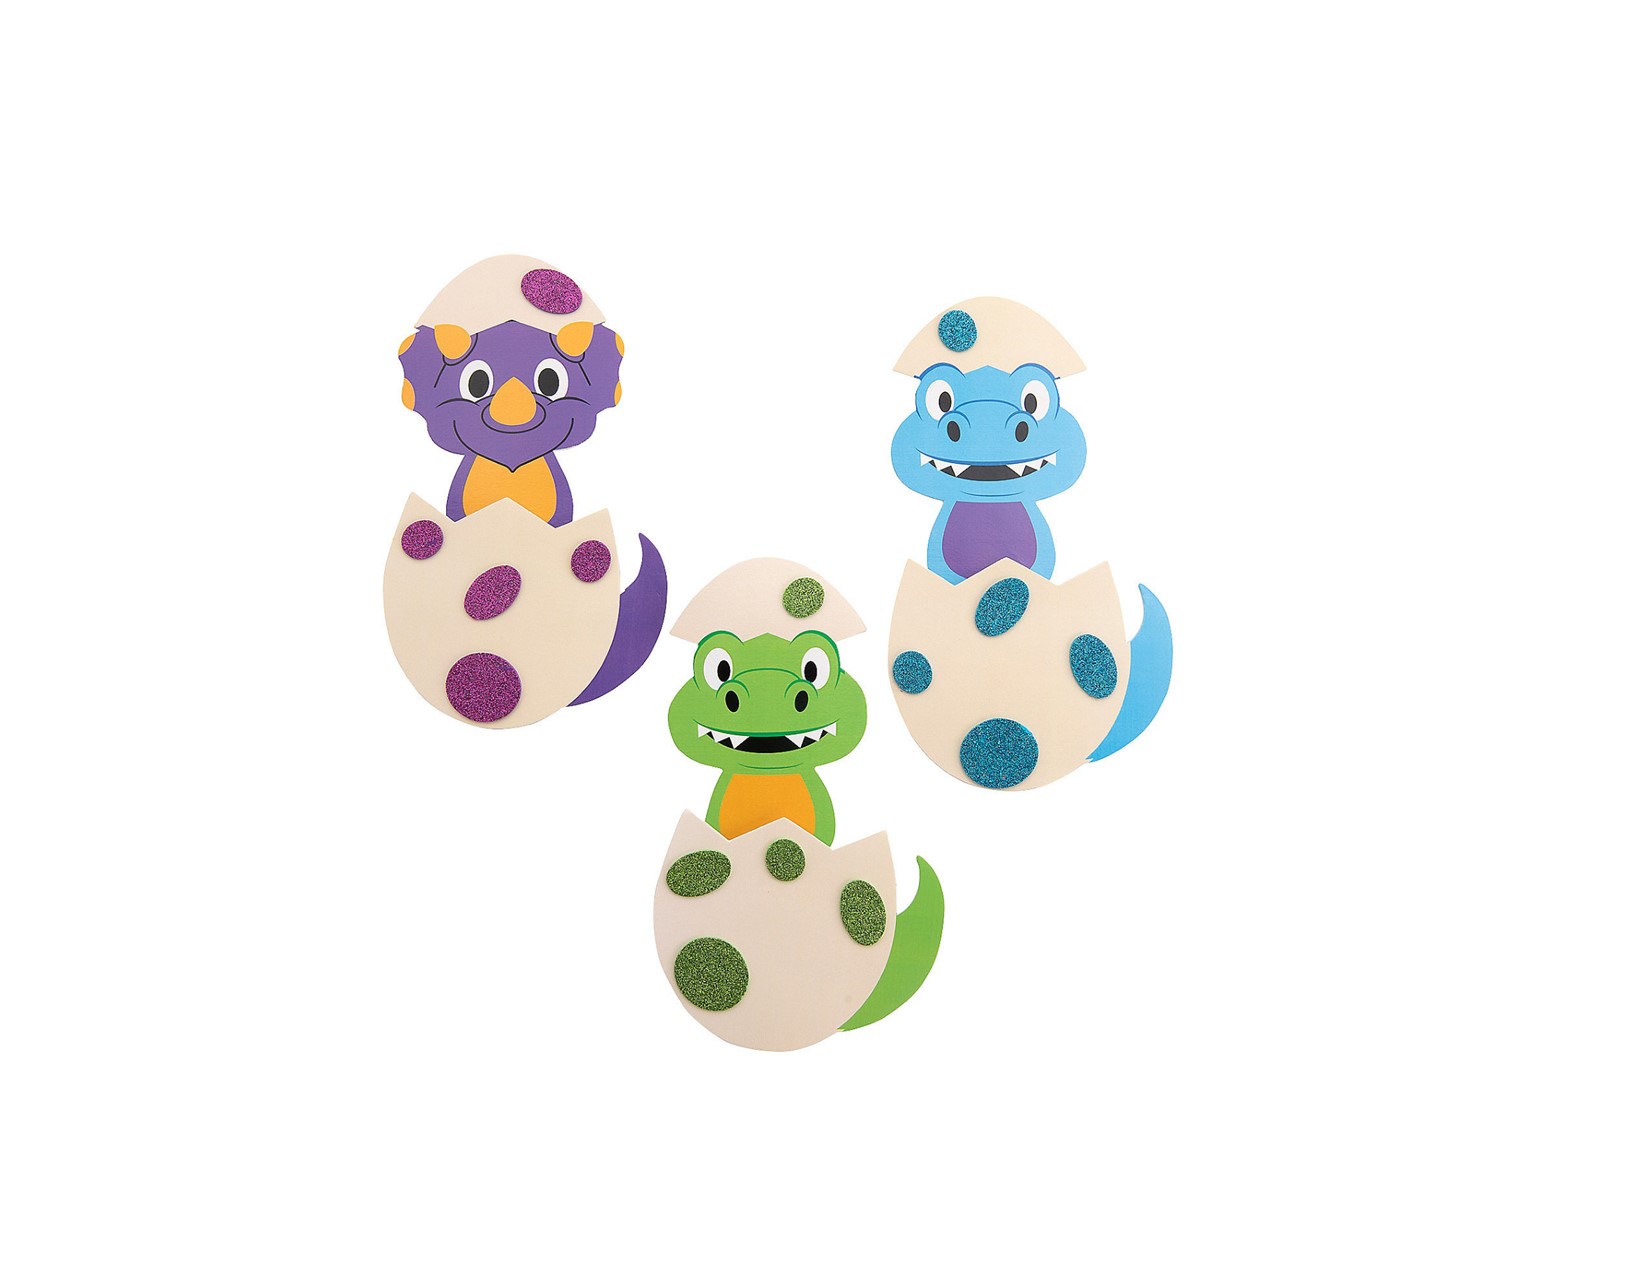 three white dino pop up egg crafts. one purple dino, one blue dino, one green dino